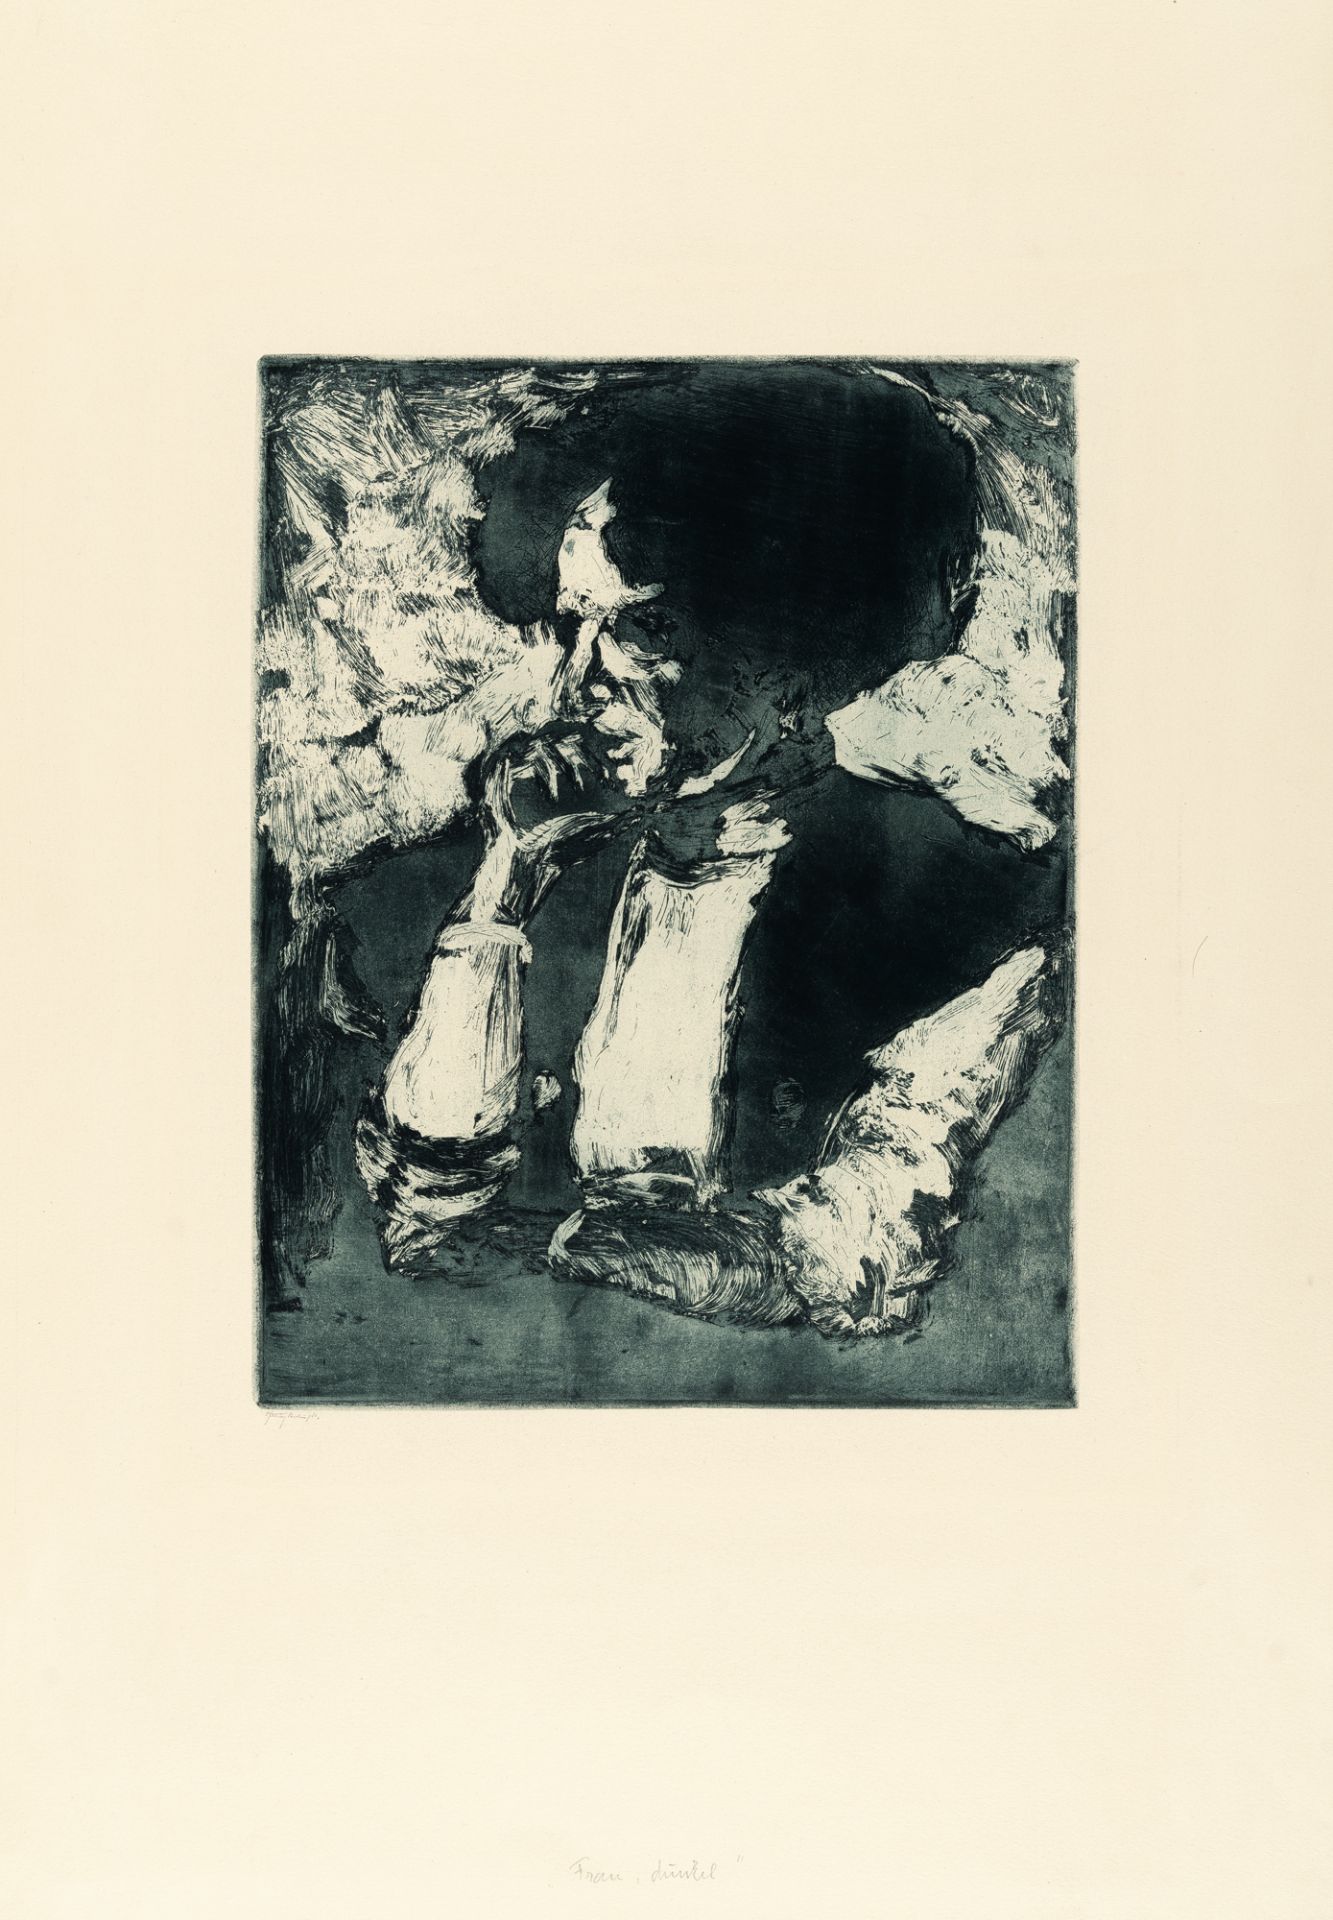 Emil Nolde (1867 Nolde - Seebüll 1956) – Frau mit dunklem Haar